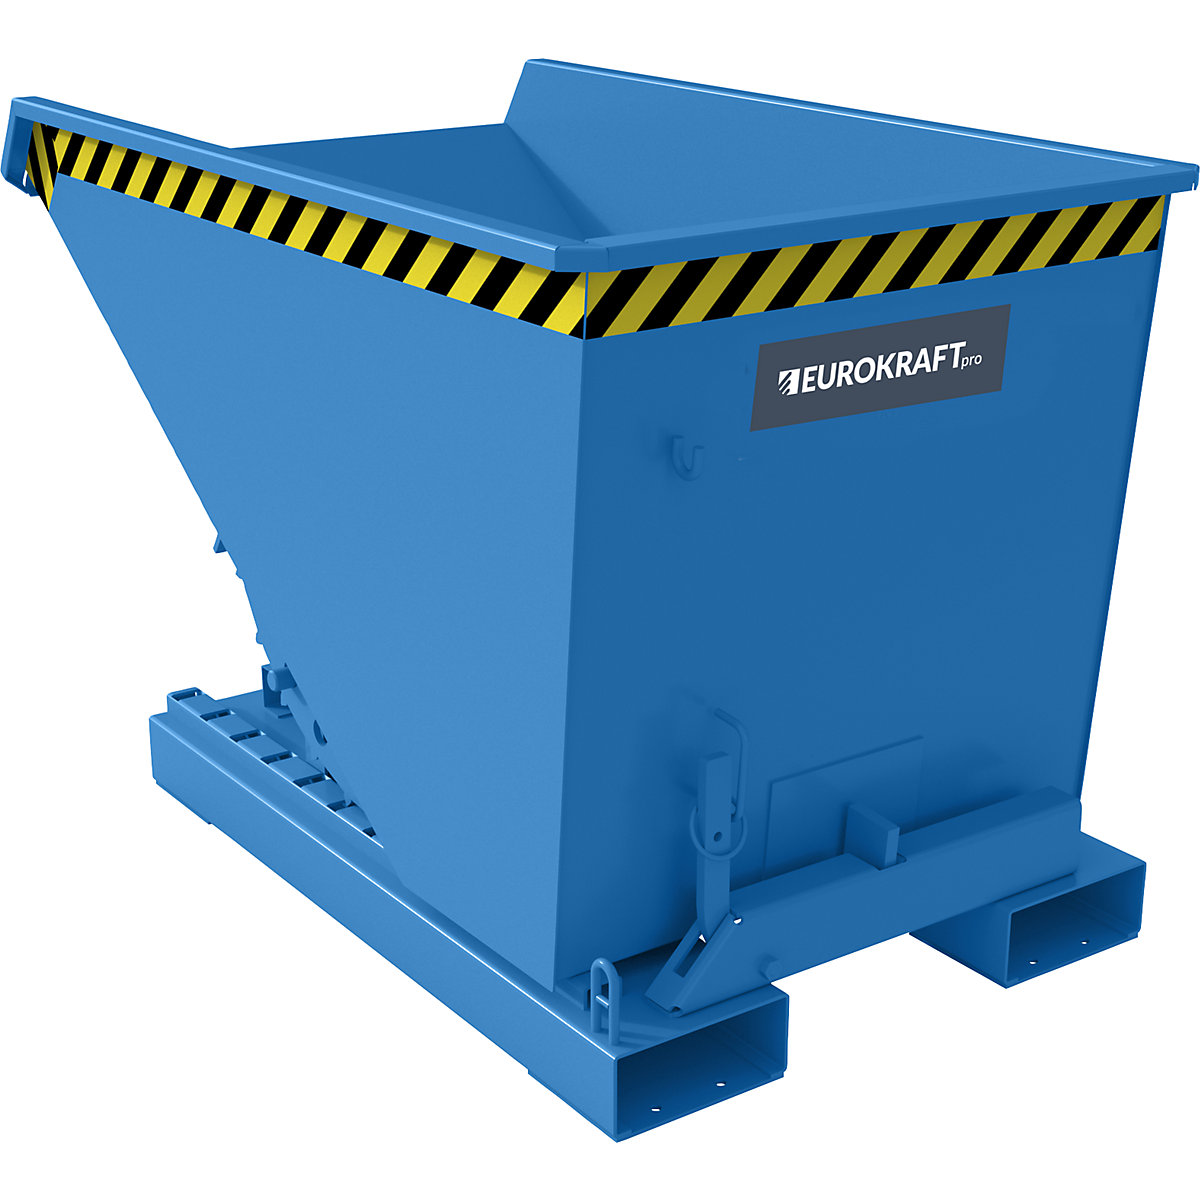 EUROKRAFTpro Kippbehälter inkl. Abrollmechanismus, Volumen 0,3 m³, LxBxH 1260 x 770 x 835 mm, blau